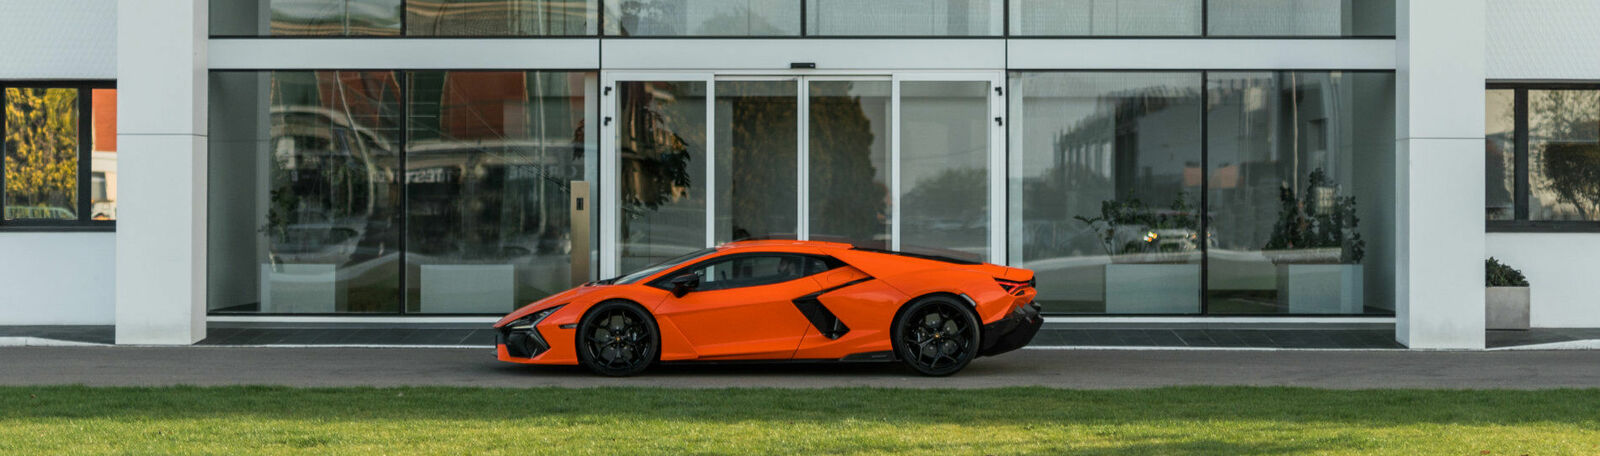 Orange Lamborghini Revuelto stands in front of a modern house.